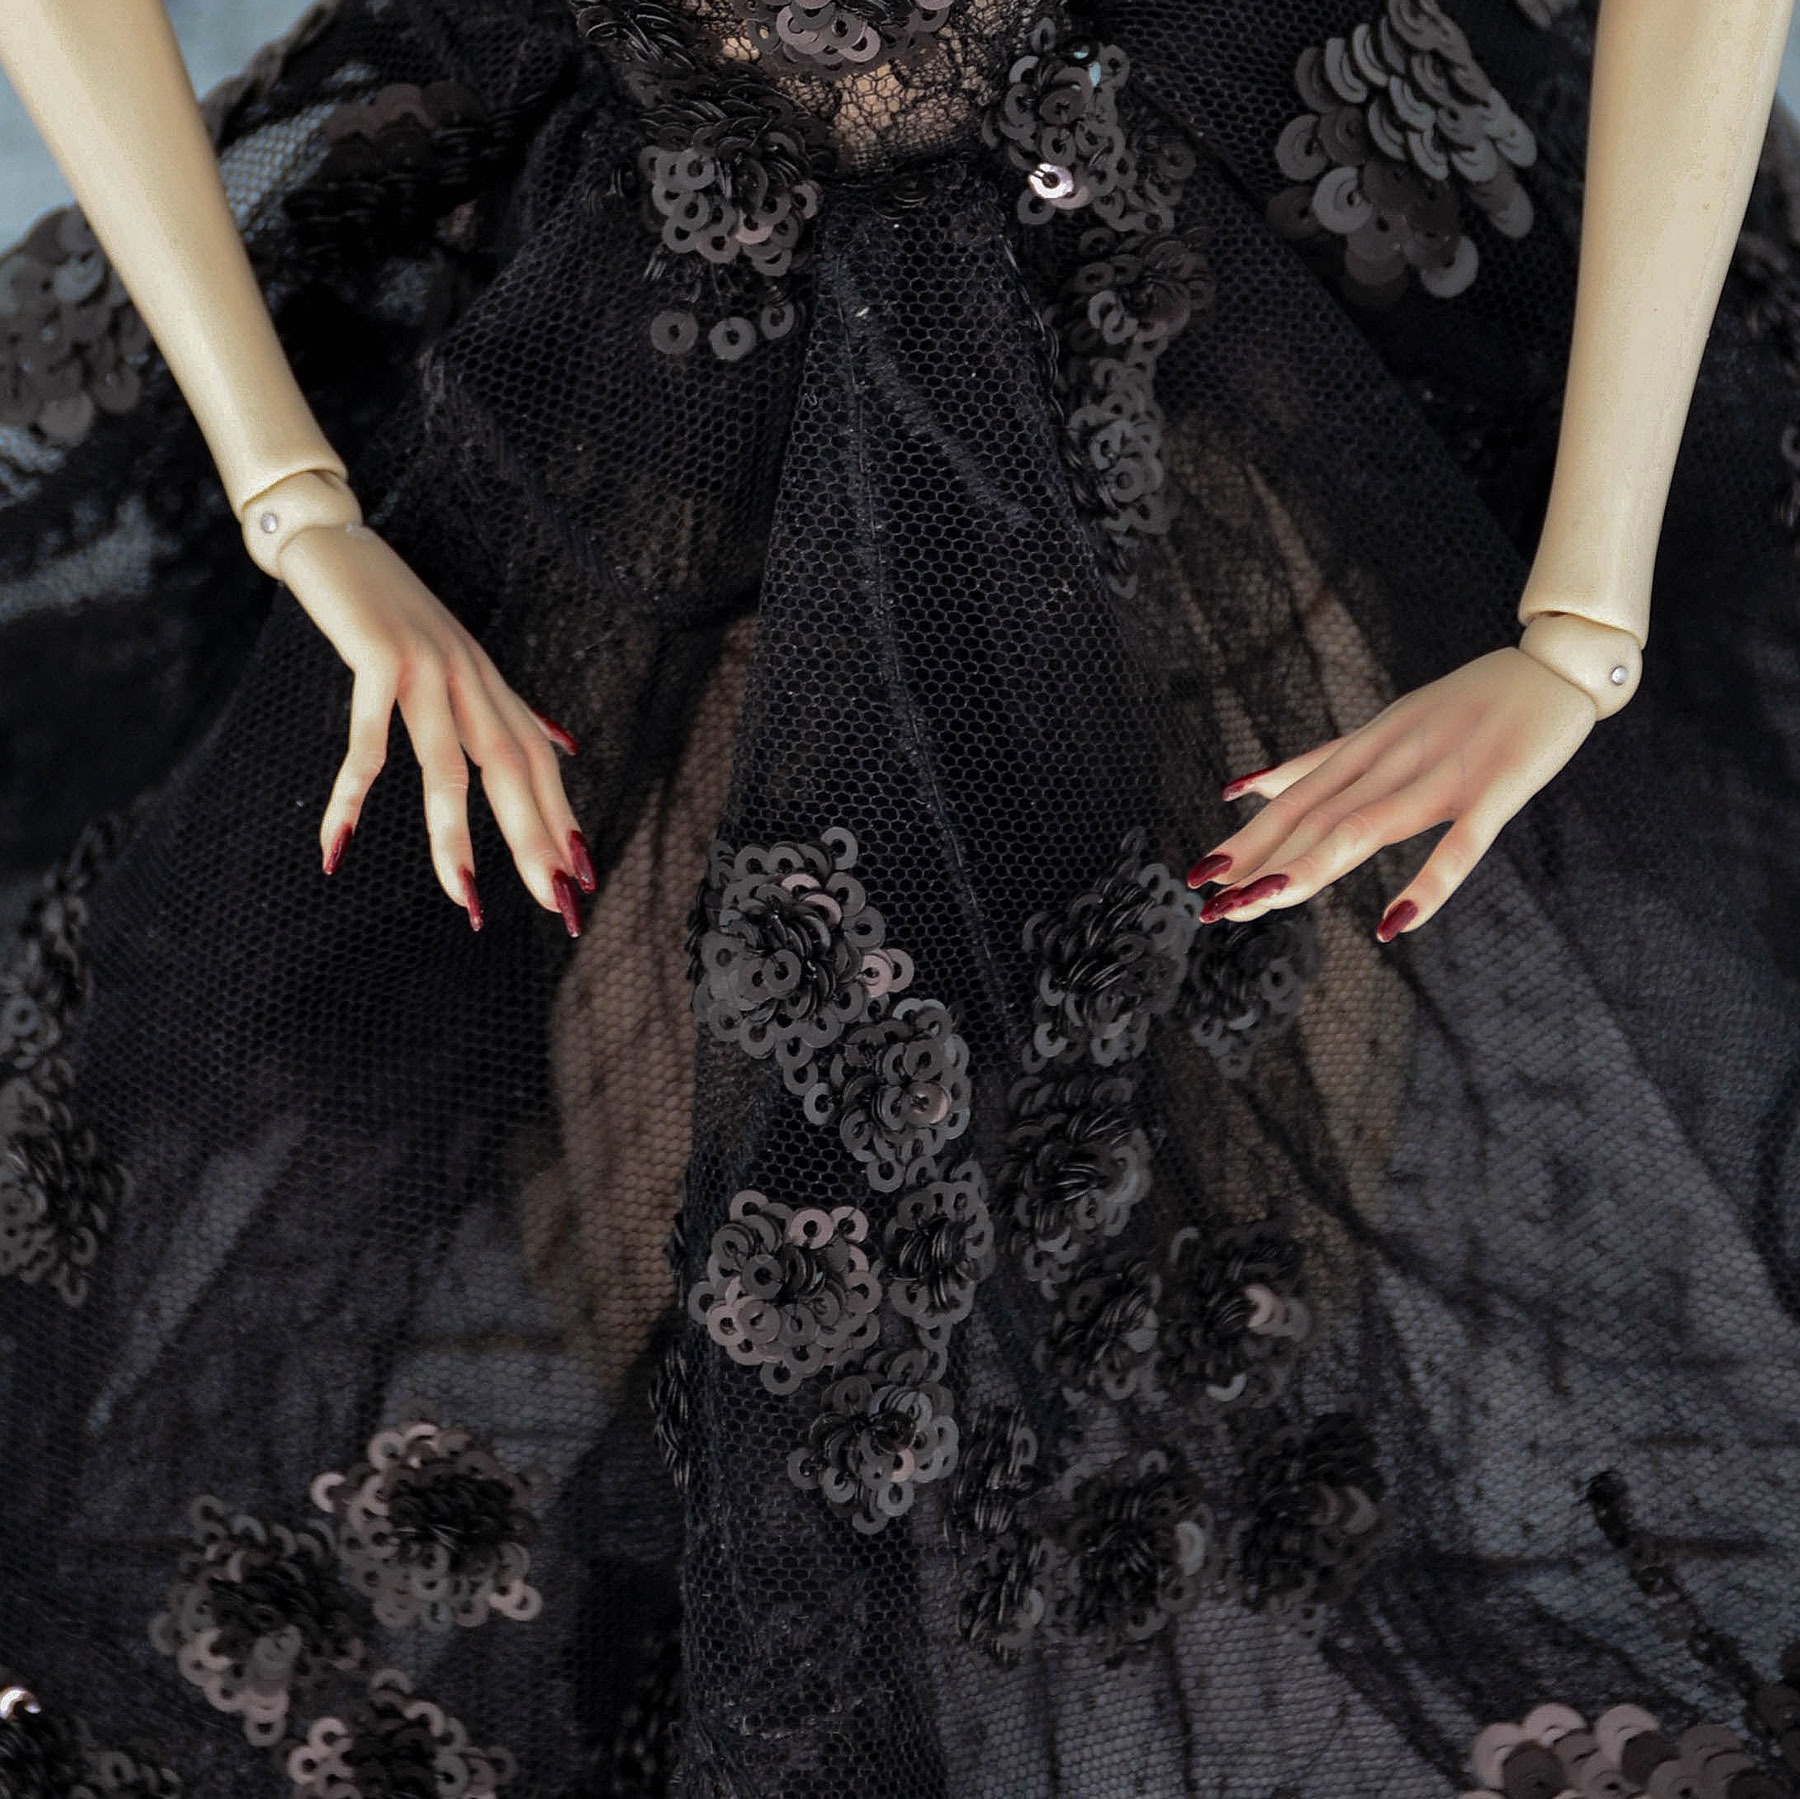 Gothic Black Lace Dress